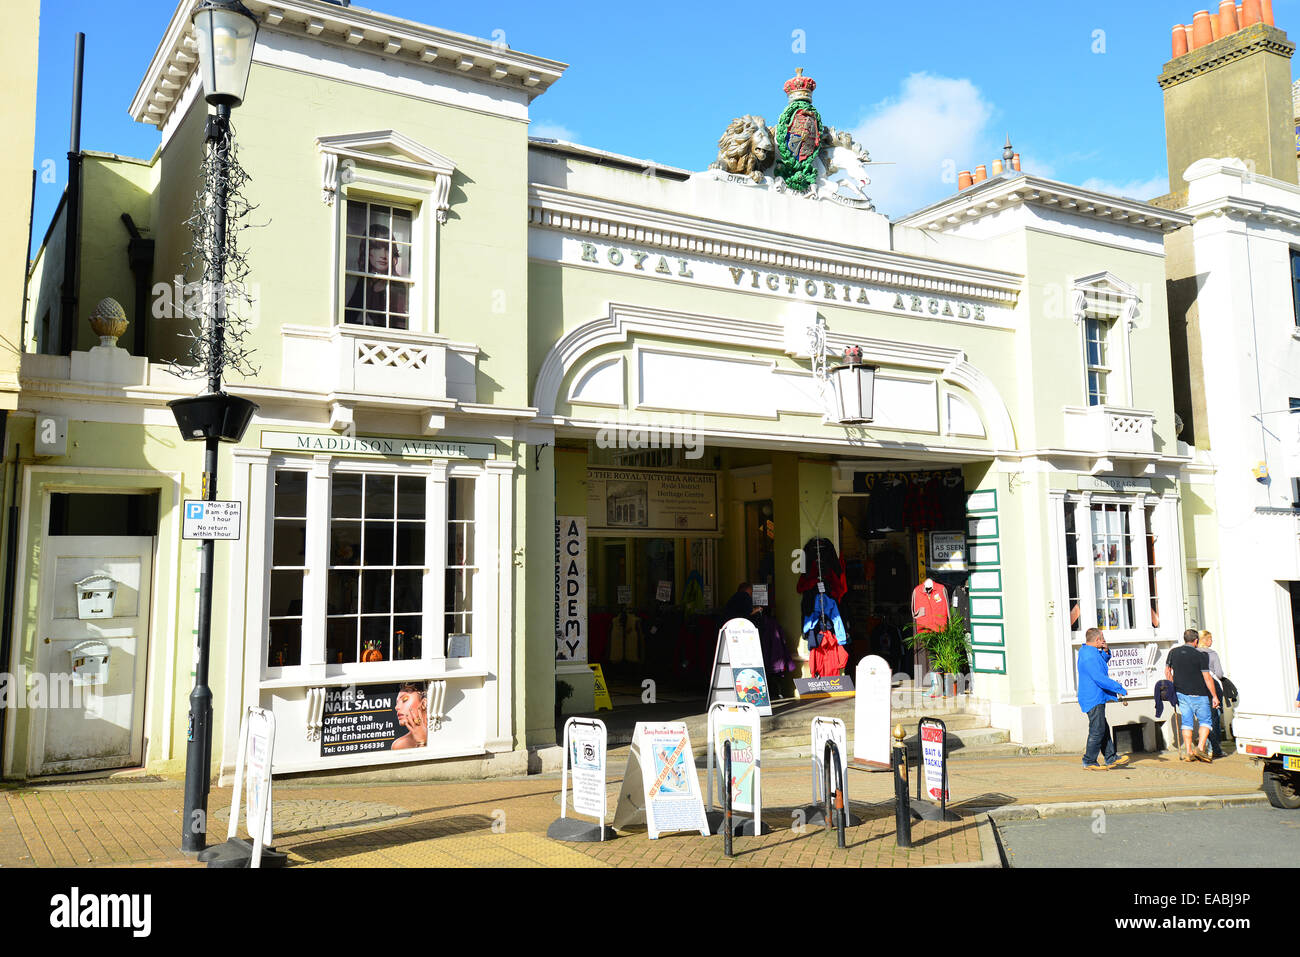 Entrance to Royal Victoria Arcade, Union Street, Ryde, Isle of Wight, England, United Kingdom Stock Photo